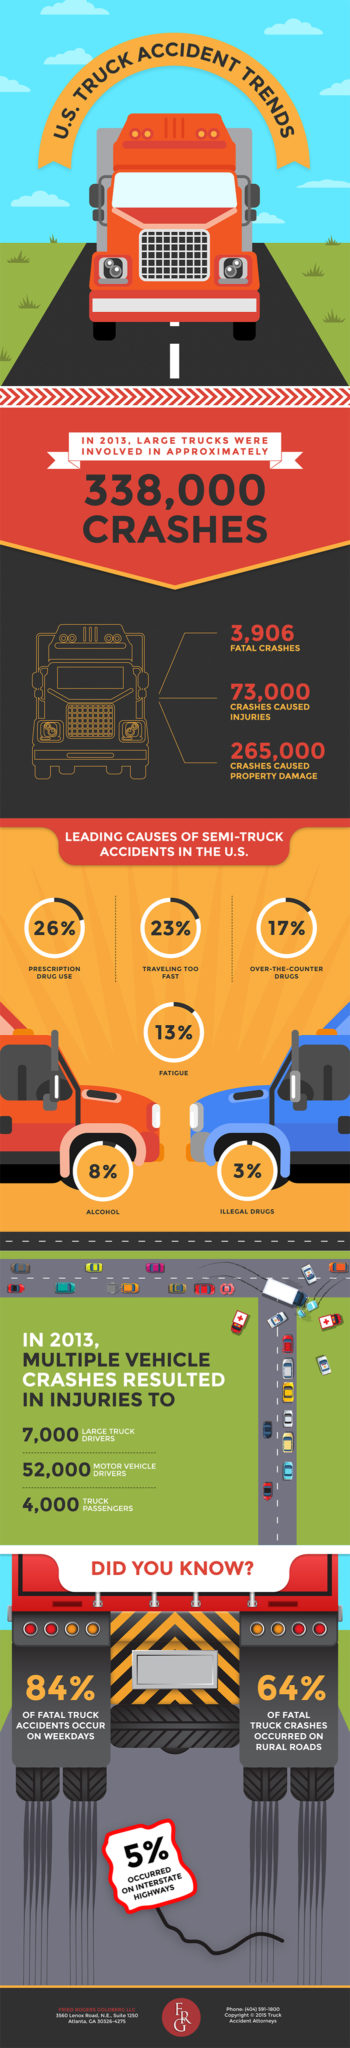 Truck Accident Statistics Infographic